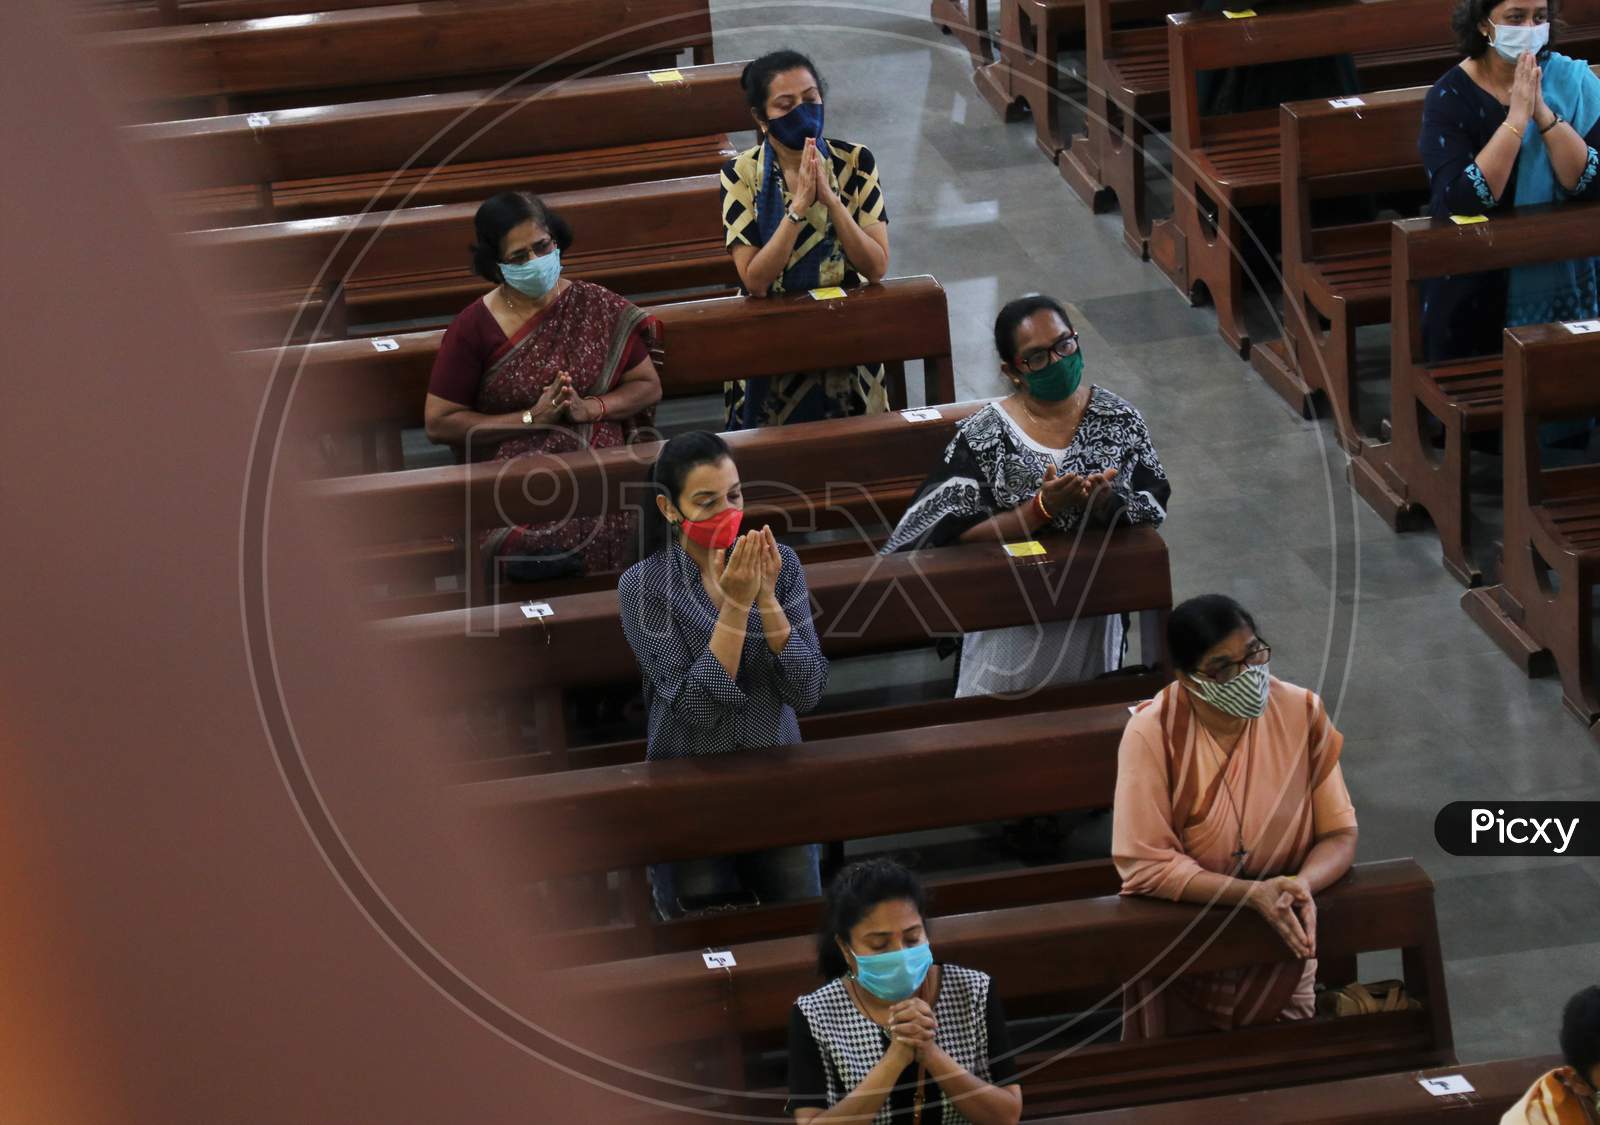 Devotees wearing protective masks attend Sunday mass at a church amid the spread of the coronavirus disease (COVID-19) in Mumbai, India, November 29, 2020.